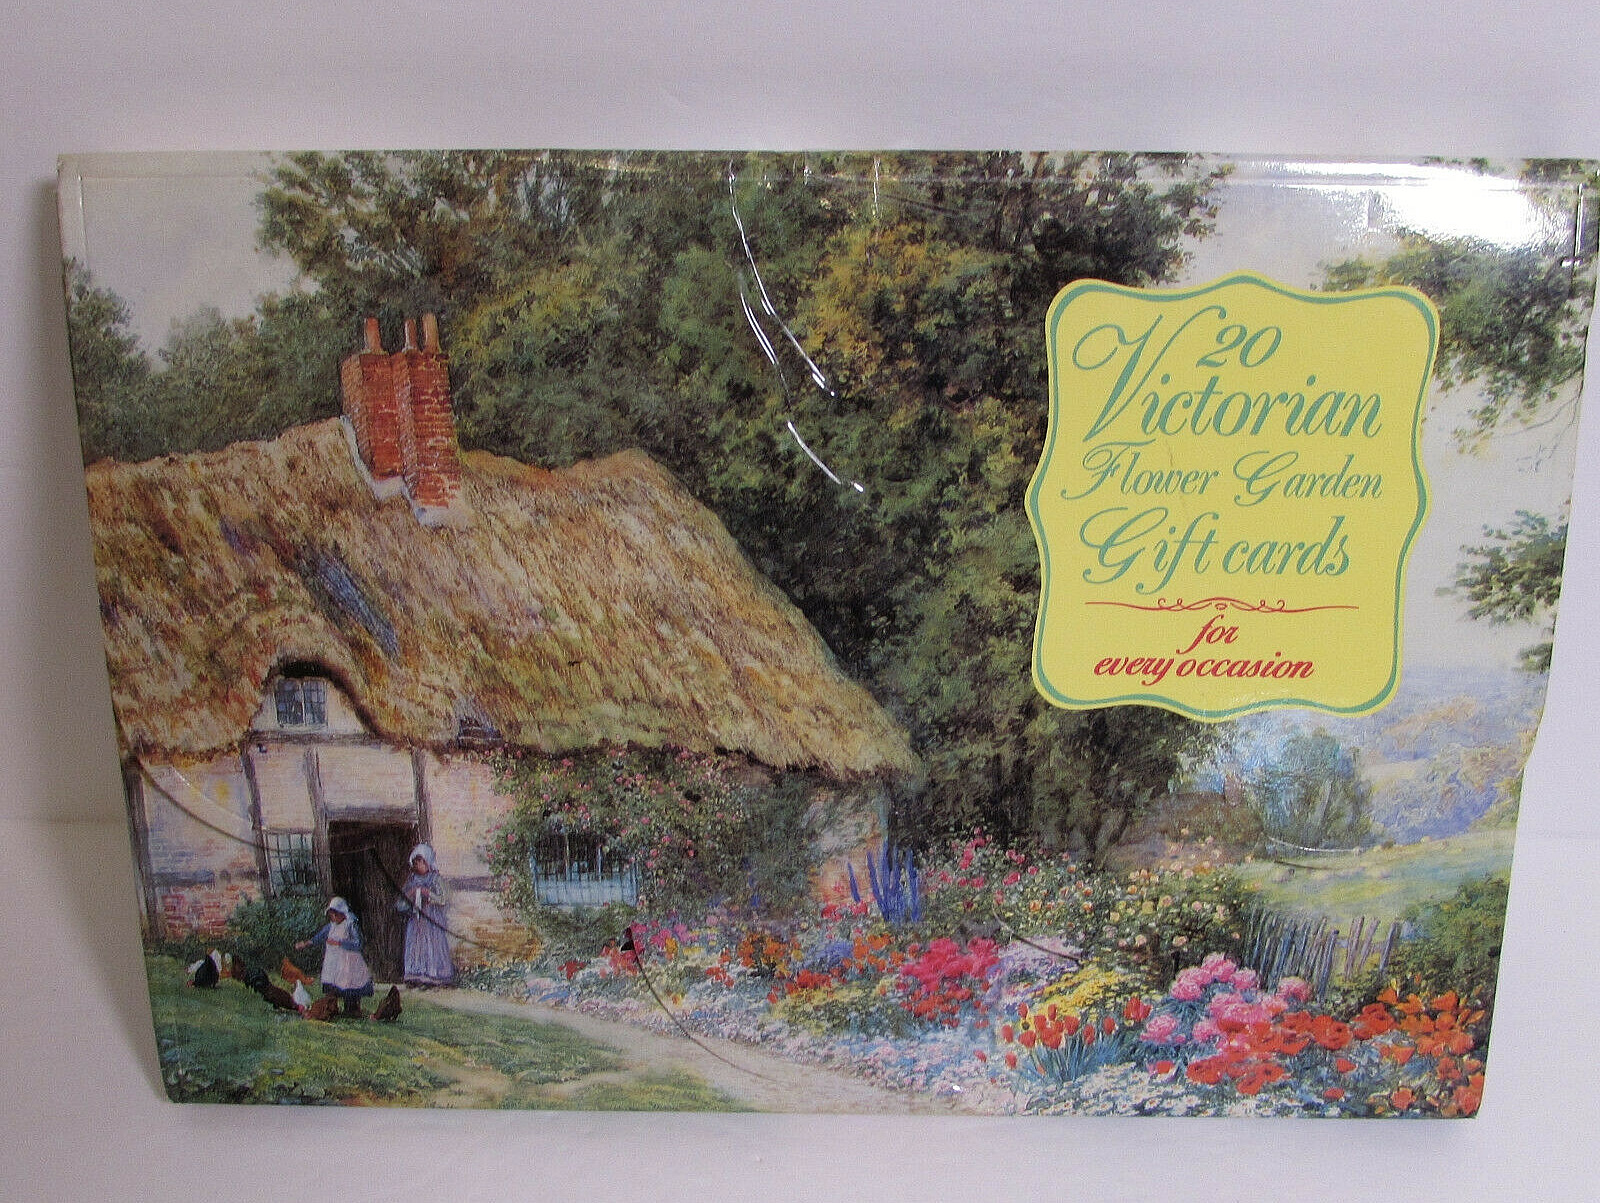 VTG Victorian Flower Garden Gift Cards for Every Occasion 20 cards/ envelopes